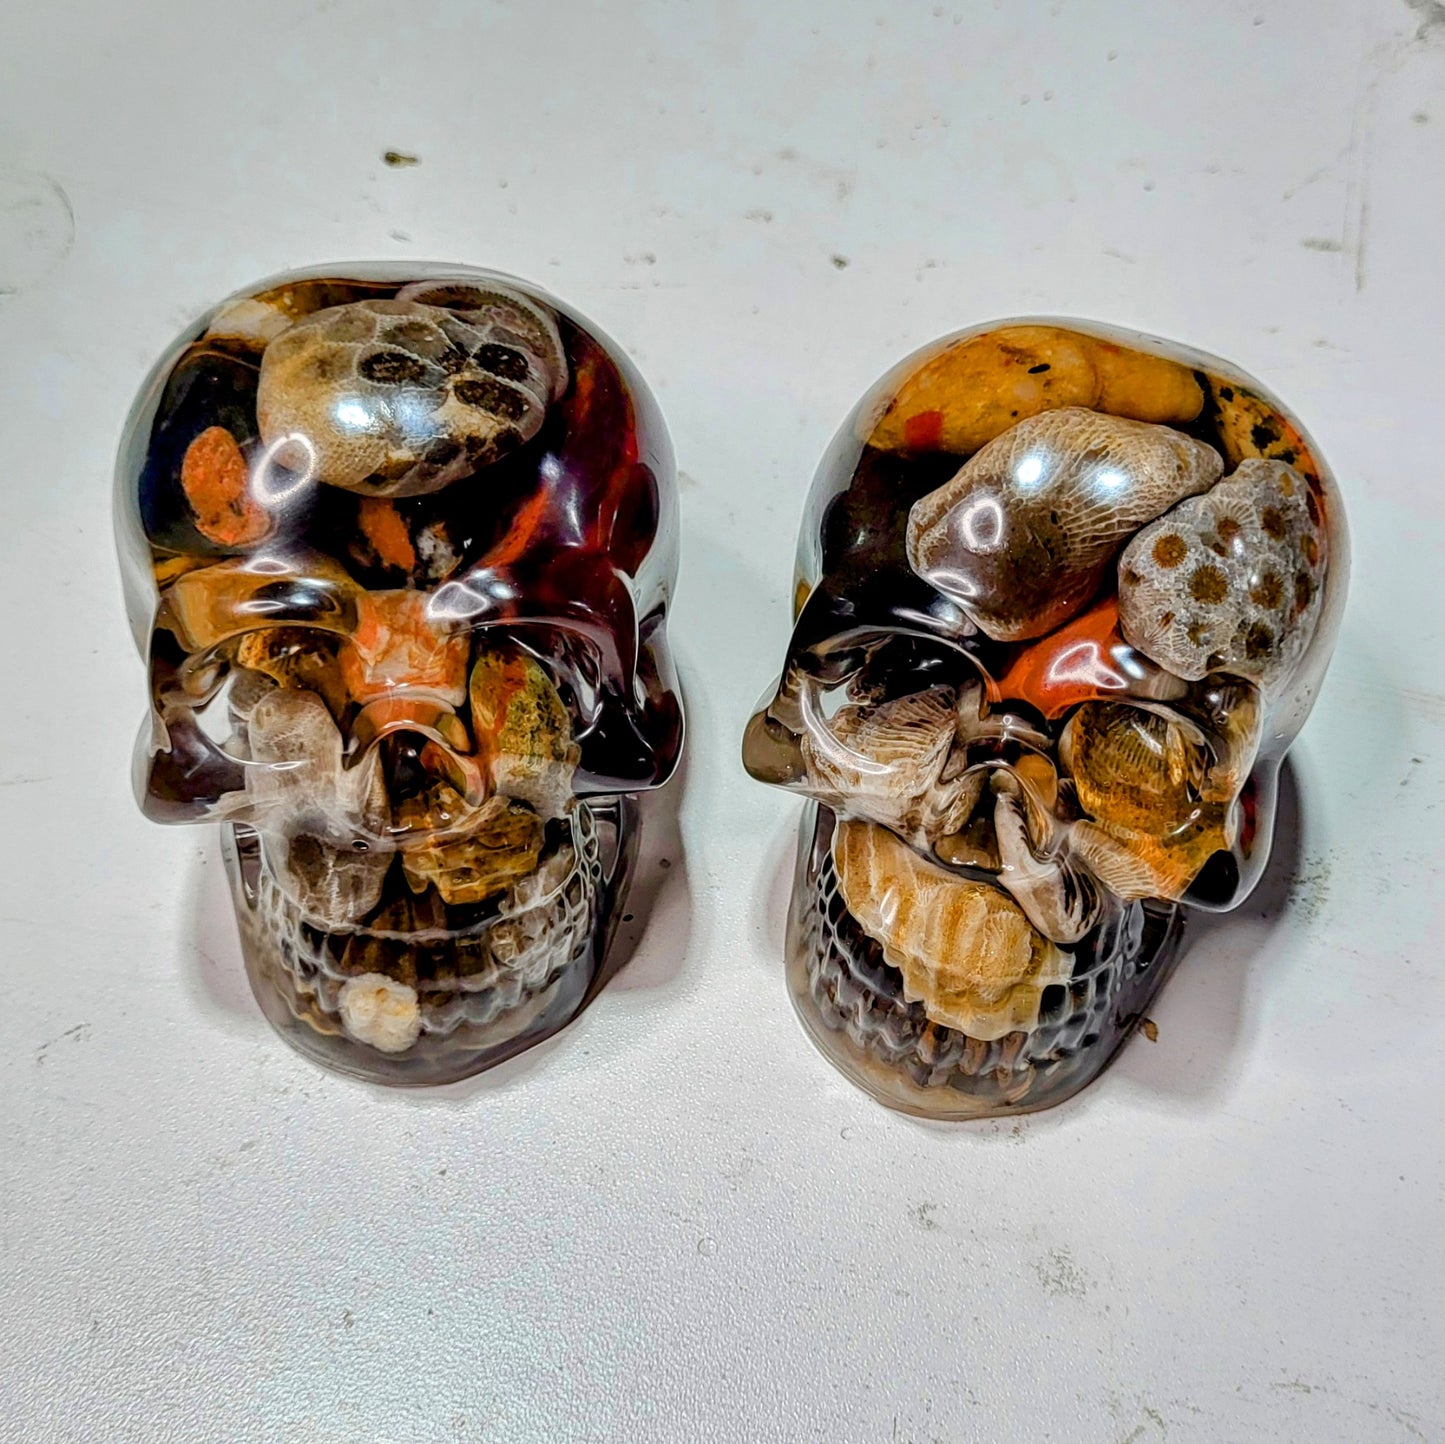 Petoskey Skull (my choice)